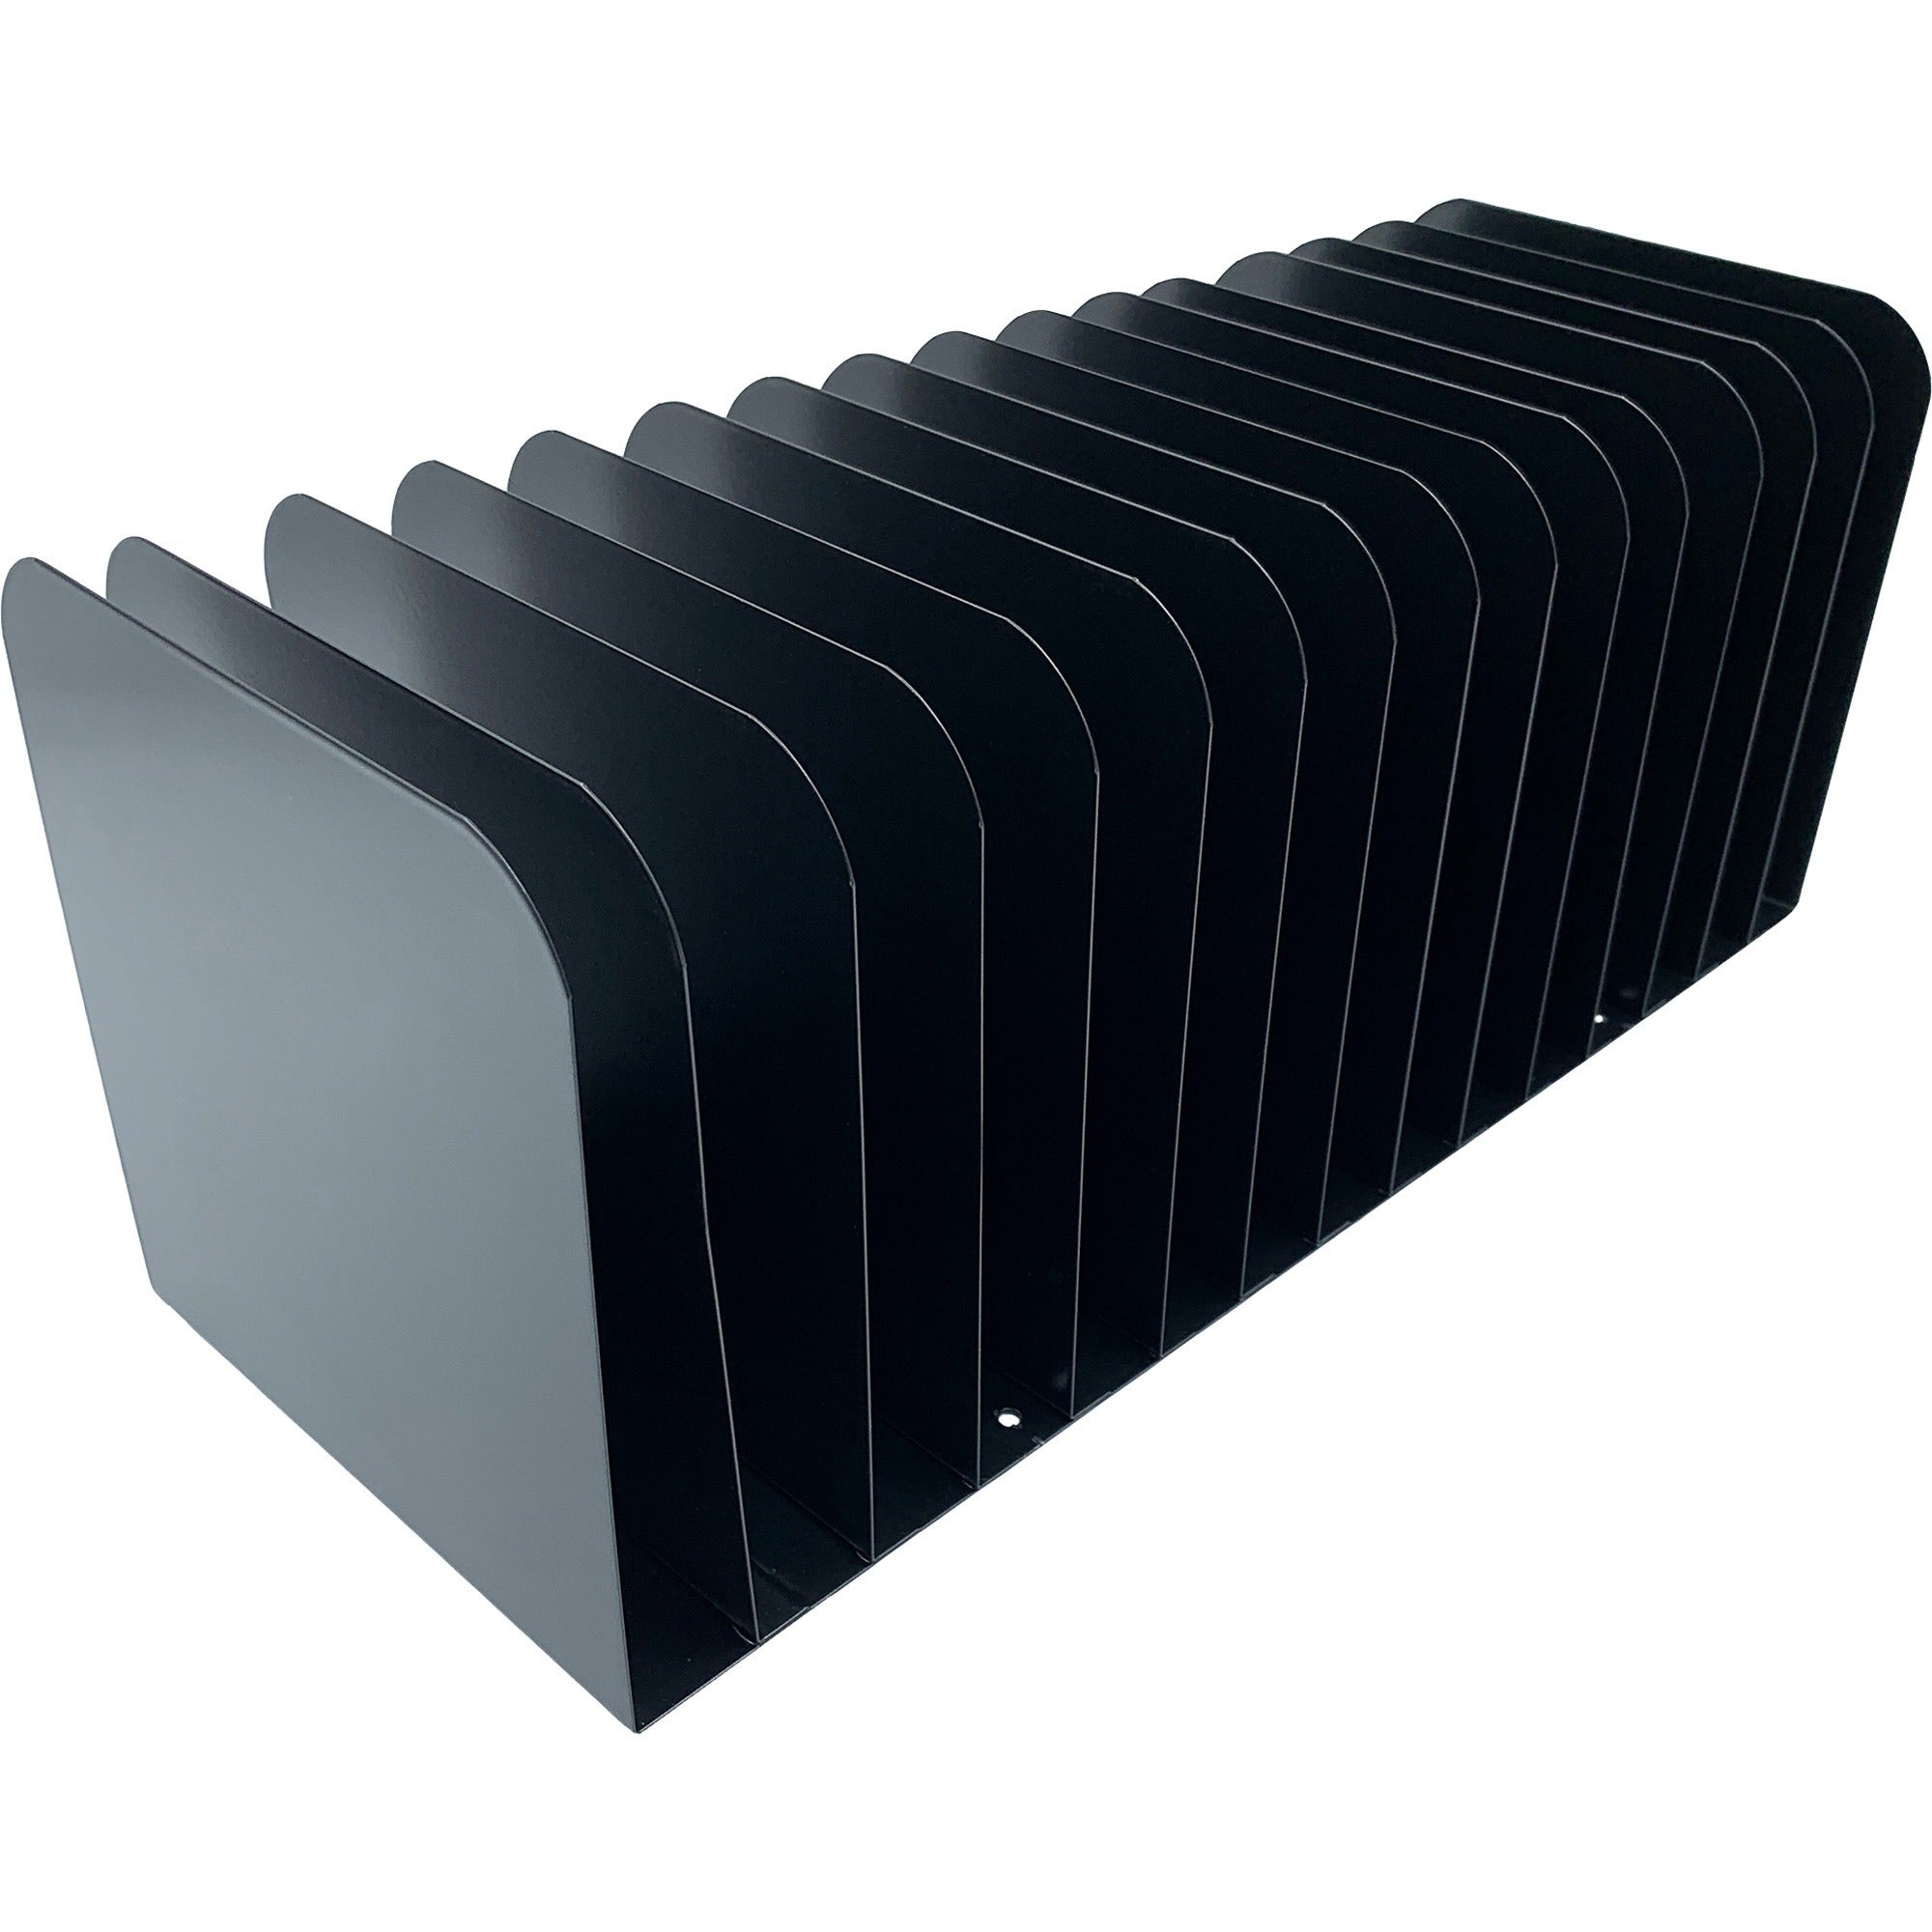 huron-15-slot-vertical-message-rack-15-compartments-vertical-65-height-x-16-width-x-163-depth-durable-black-steel-1-each_hurhasz0178 - 1